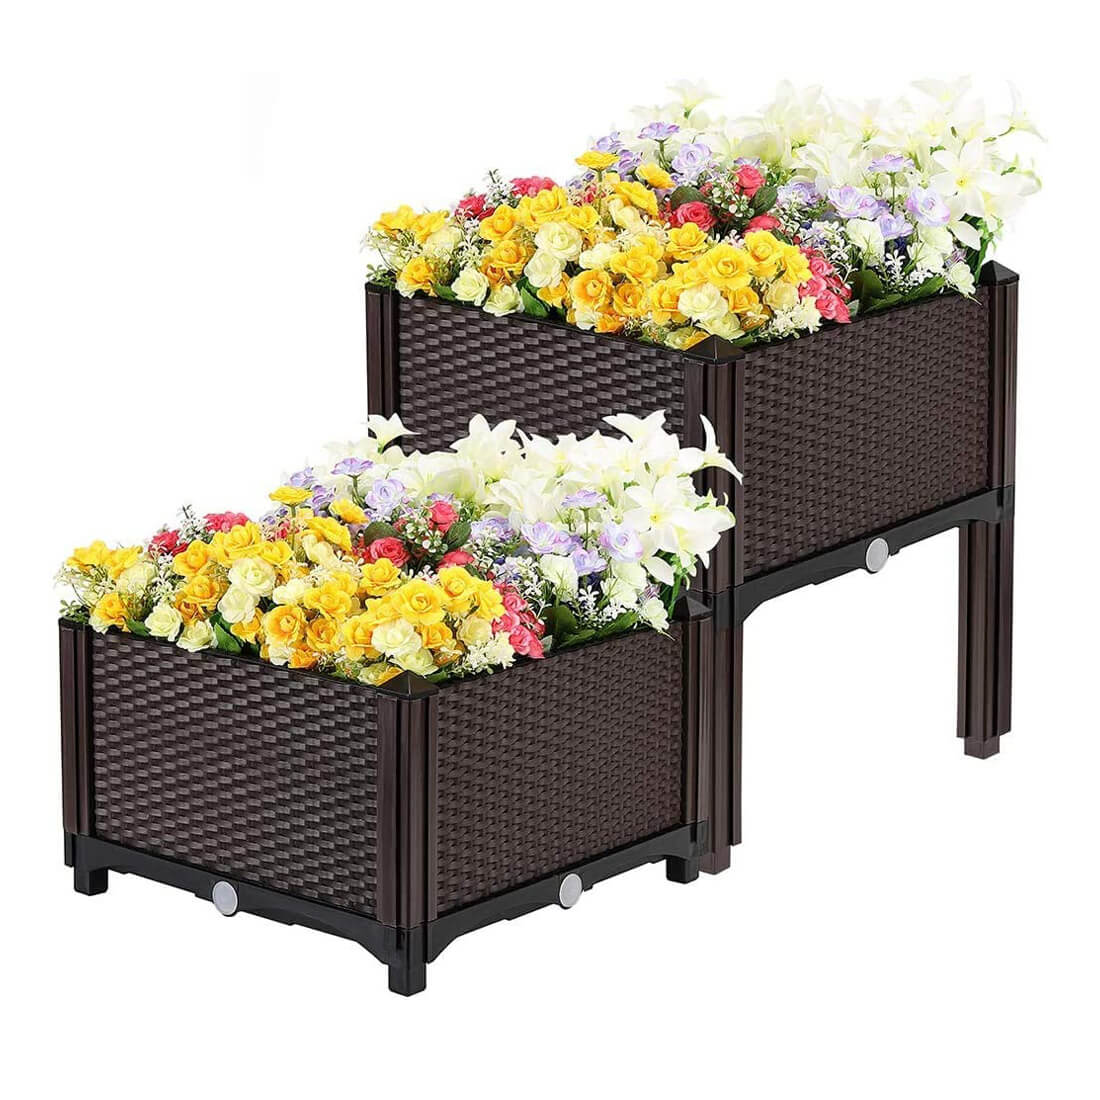  VIVOHOME Elevated Plastic Raised Garden Bed Planter Kit for Flower Vegetable Grow Brown Set of 2